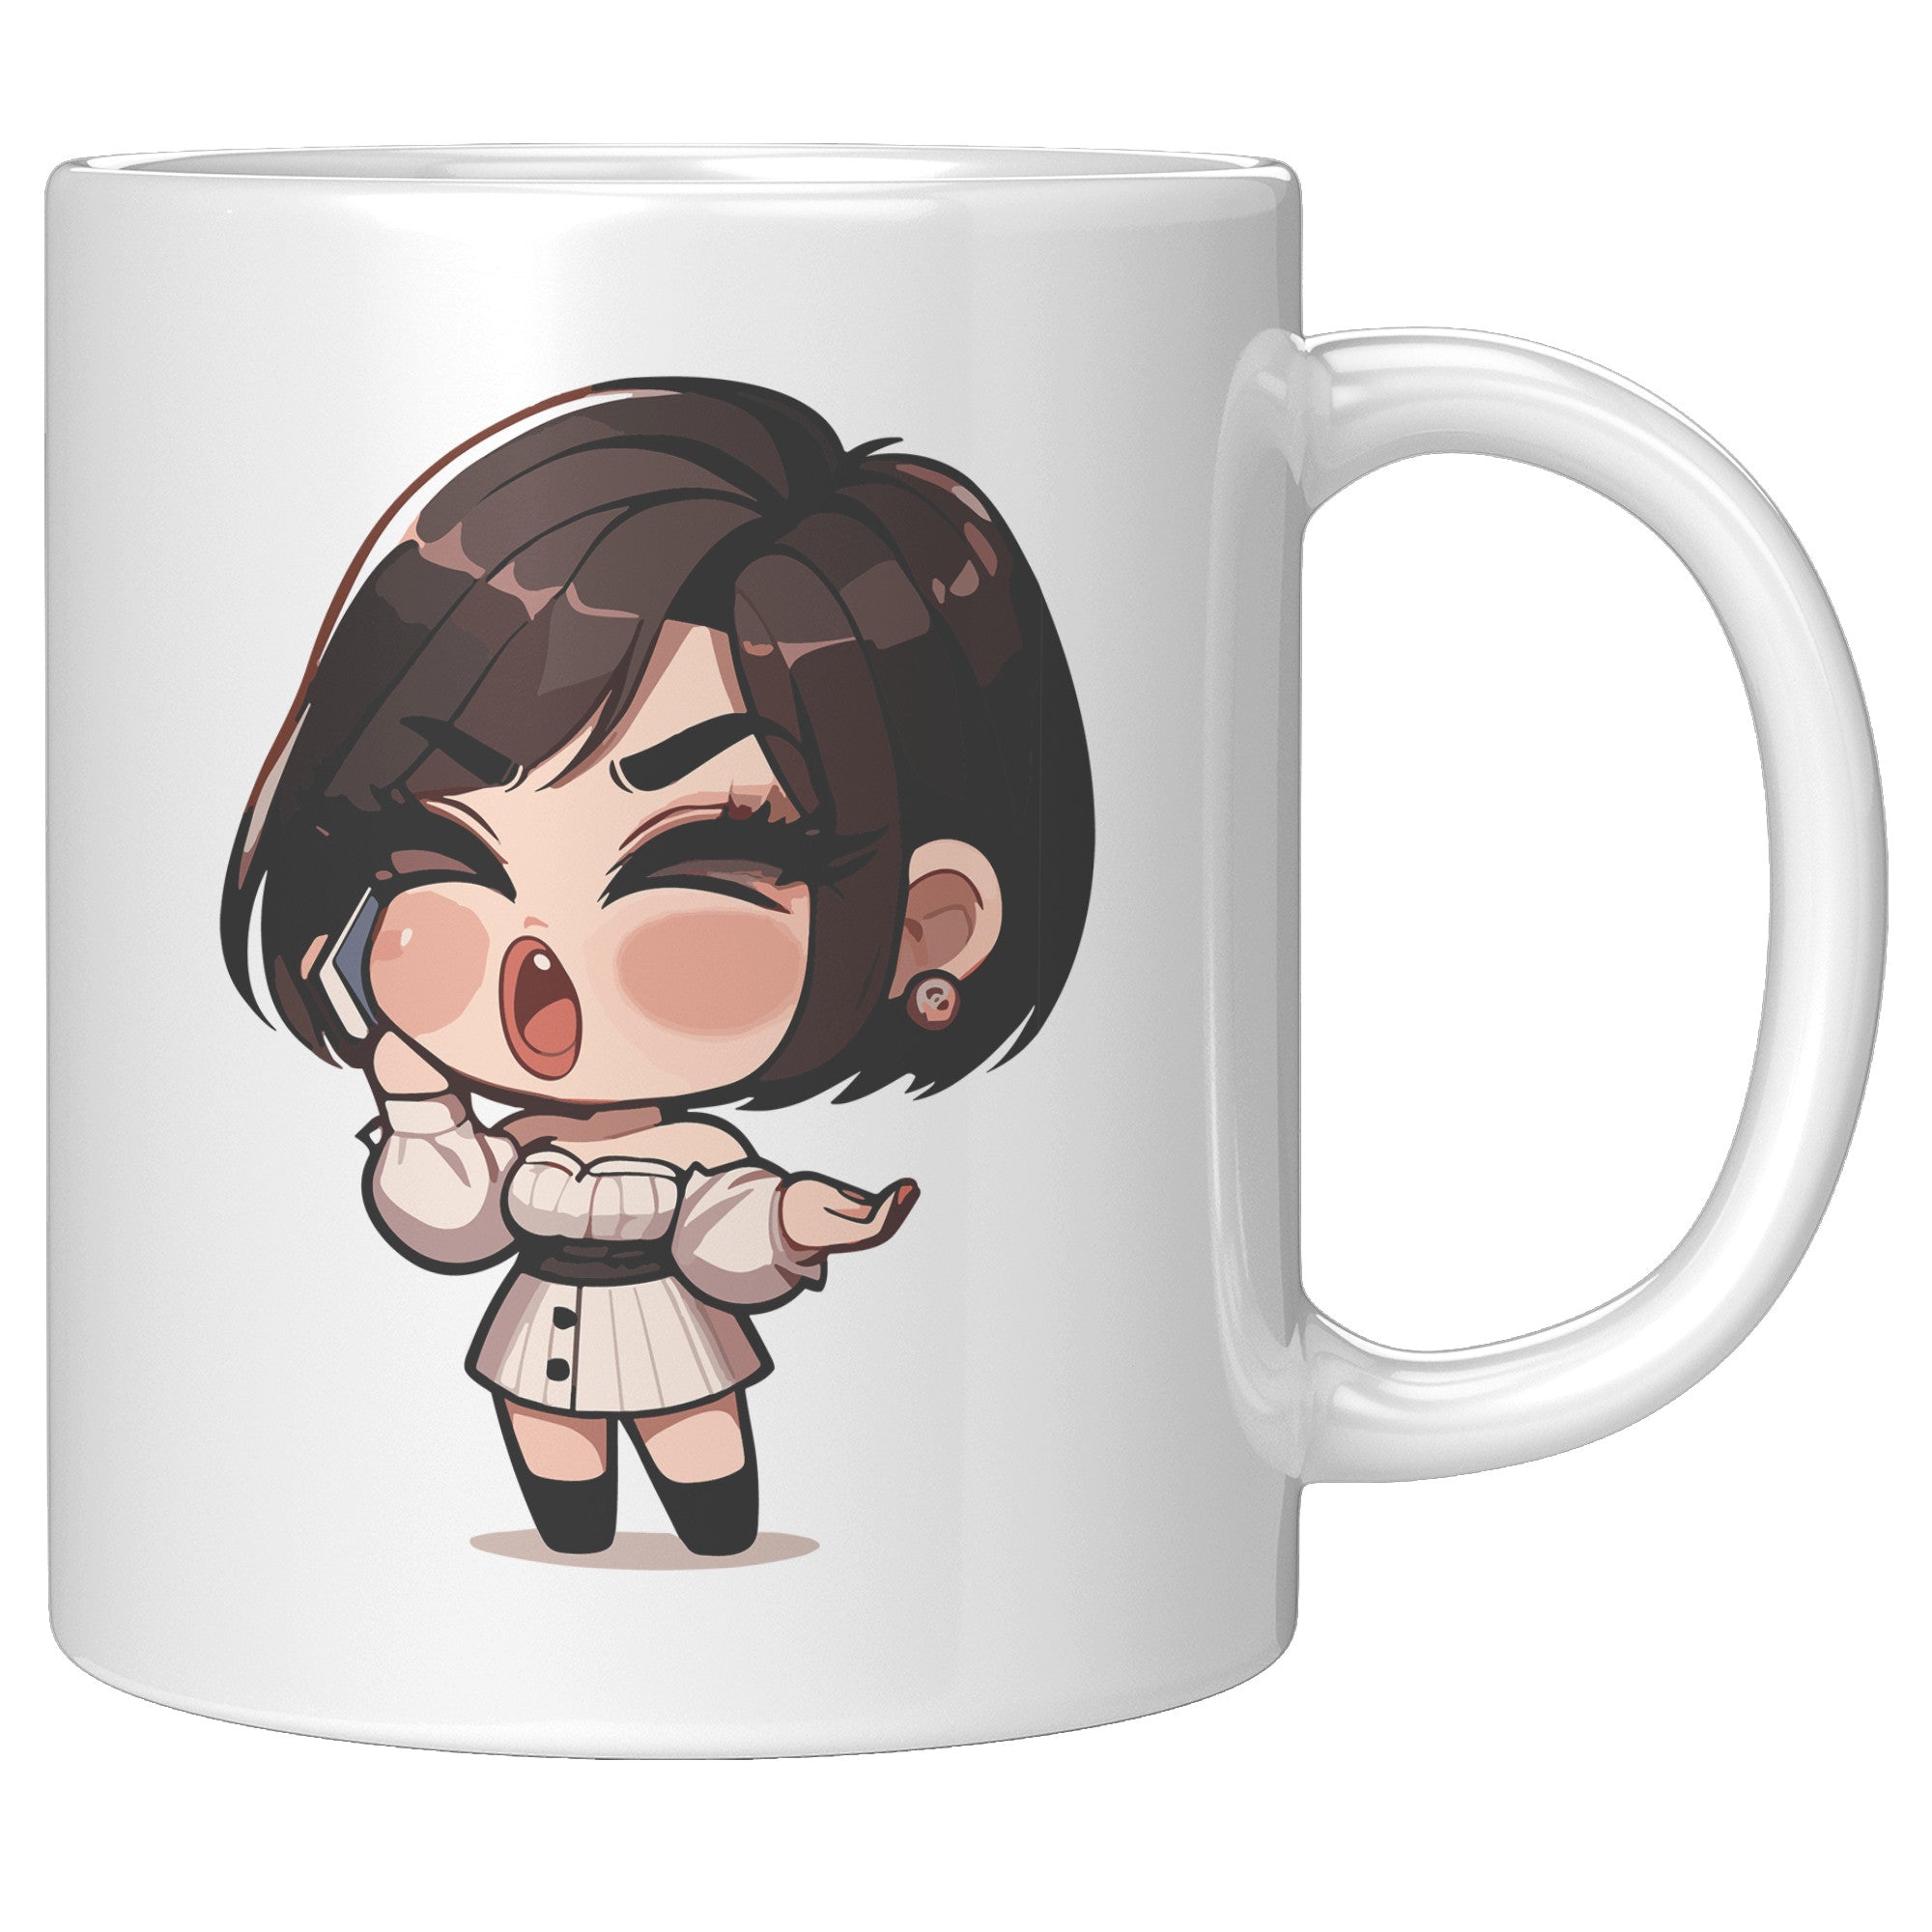 "Marites Gossip Queen Coffee Mug - Cute Cartoon 'Ano Ang Latest?' Cup - Perfect Chismosa Gift - Filipino Slang Tea Mug" - UUU